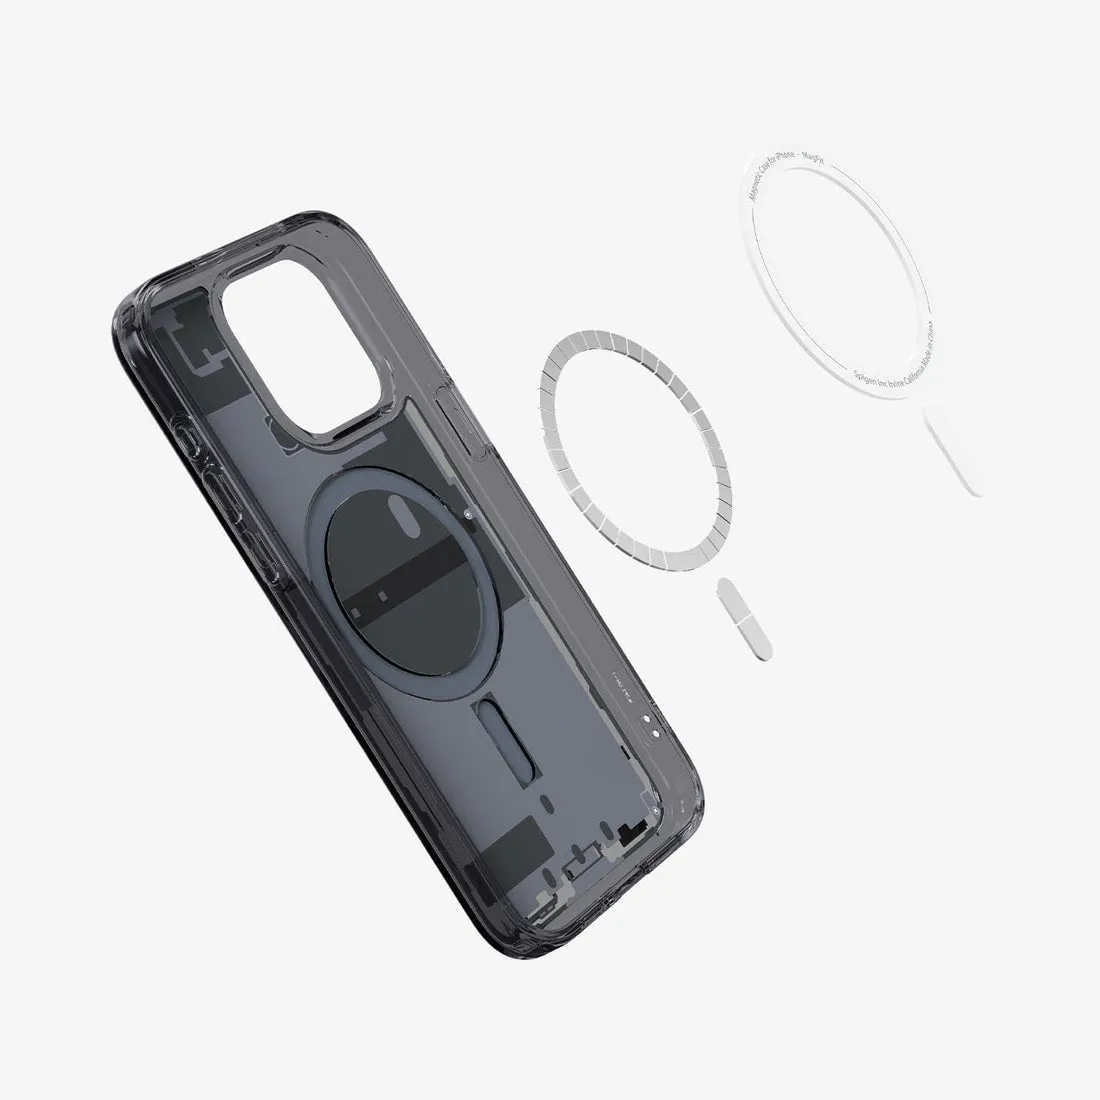 Spigen Apple iPhone 15 Plus Ultra Hybrid Back Case Cover (Magfit